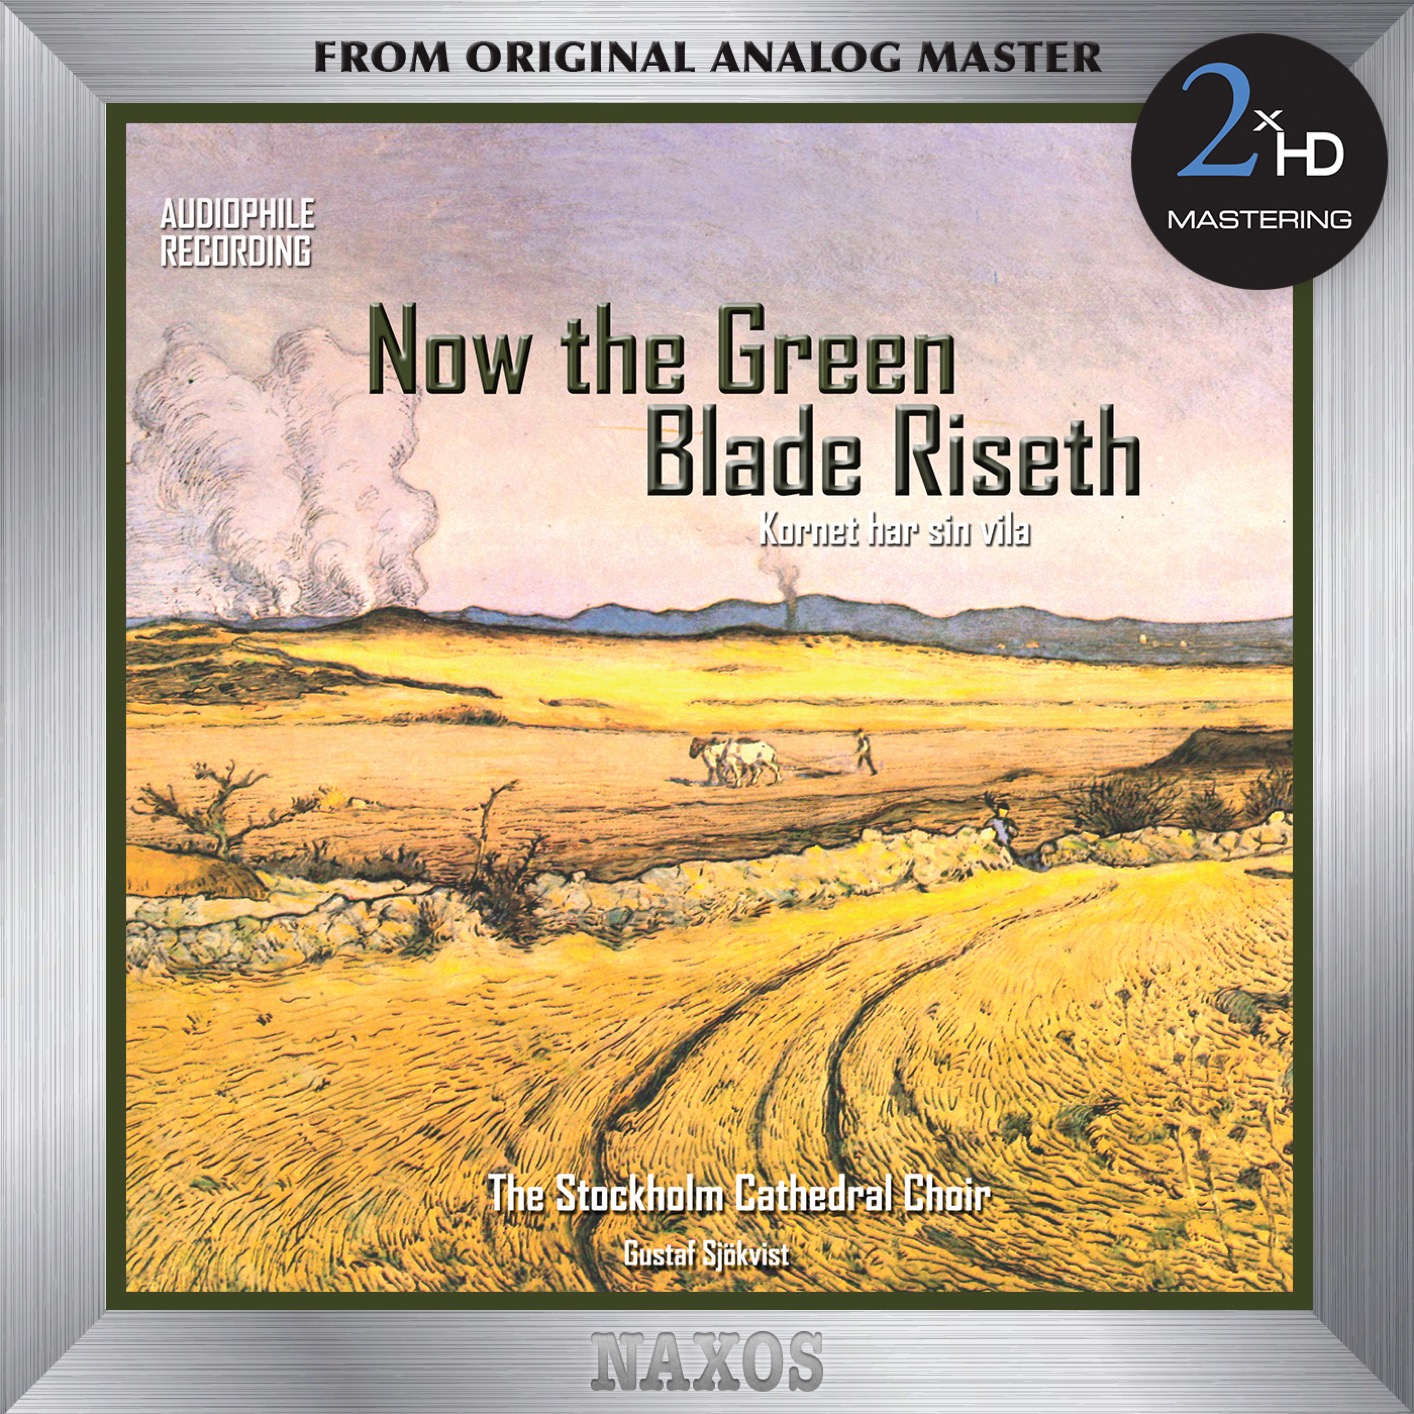 Stockholm Cathedral Choir & Gustaf Sjokvist - Now the Green Blade Riseth (1981/2016) [FLAC 24bit/192kHz]